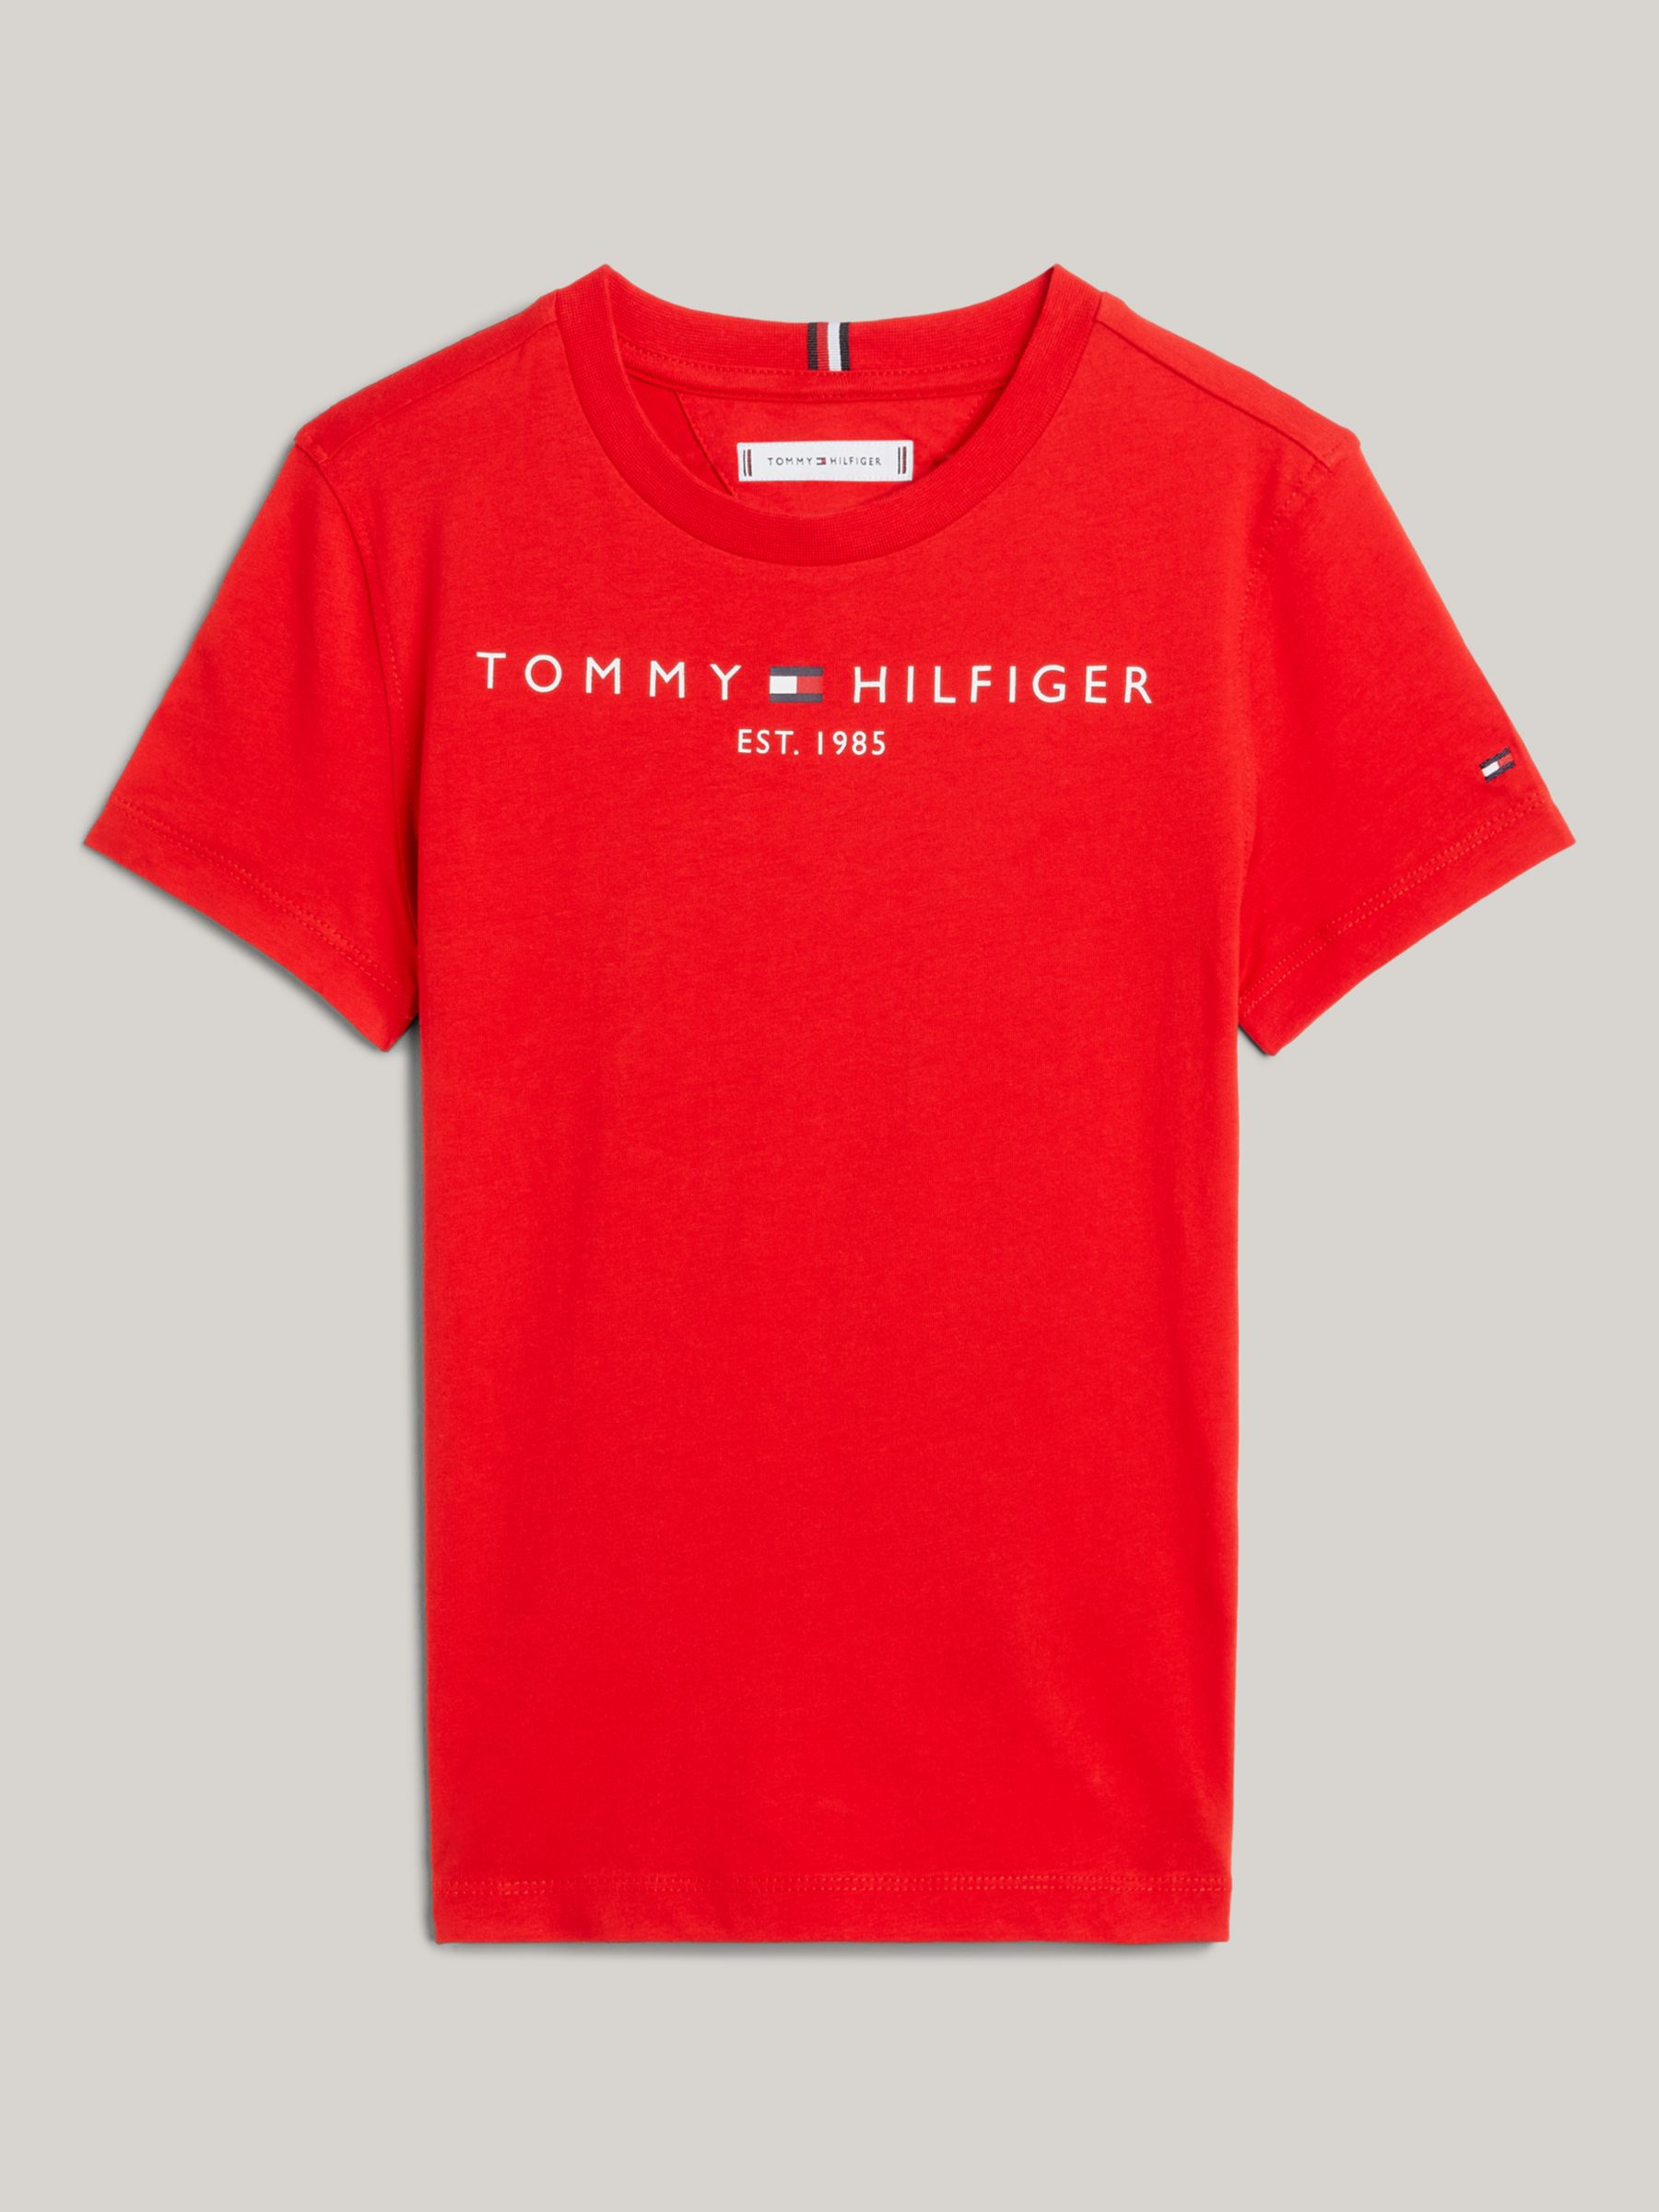 Tommy Hilfiger Red & Logo at Tee, Crimson Partners Cotton Deep Organic Kids\' John Lewis Essential